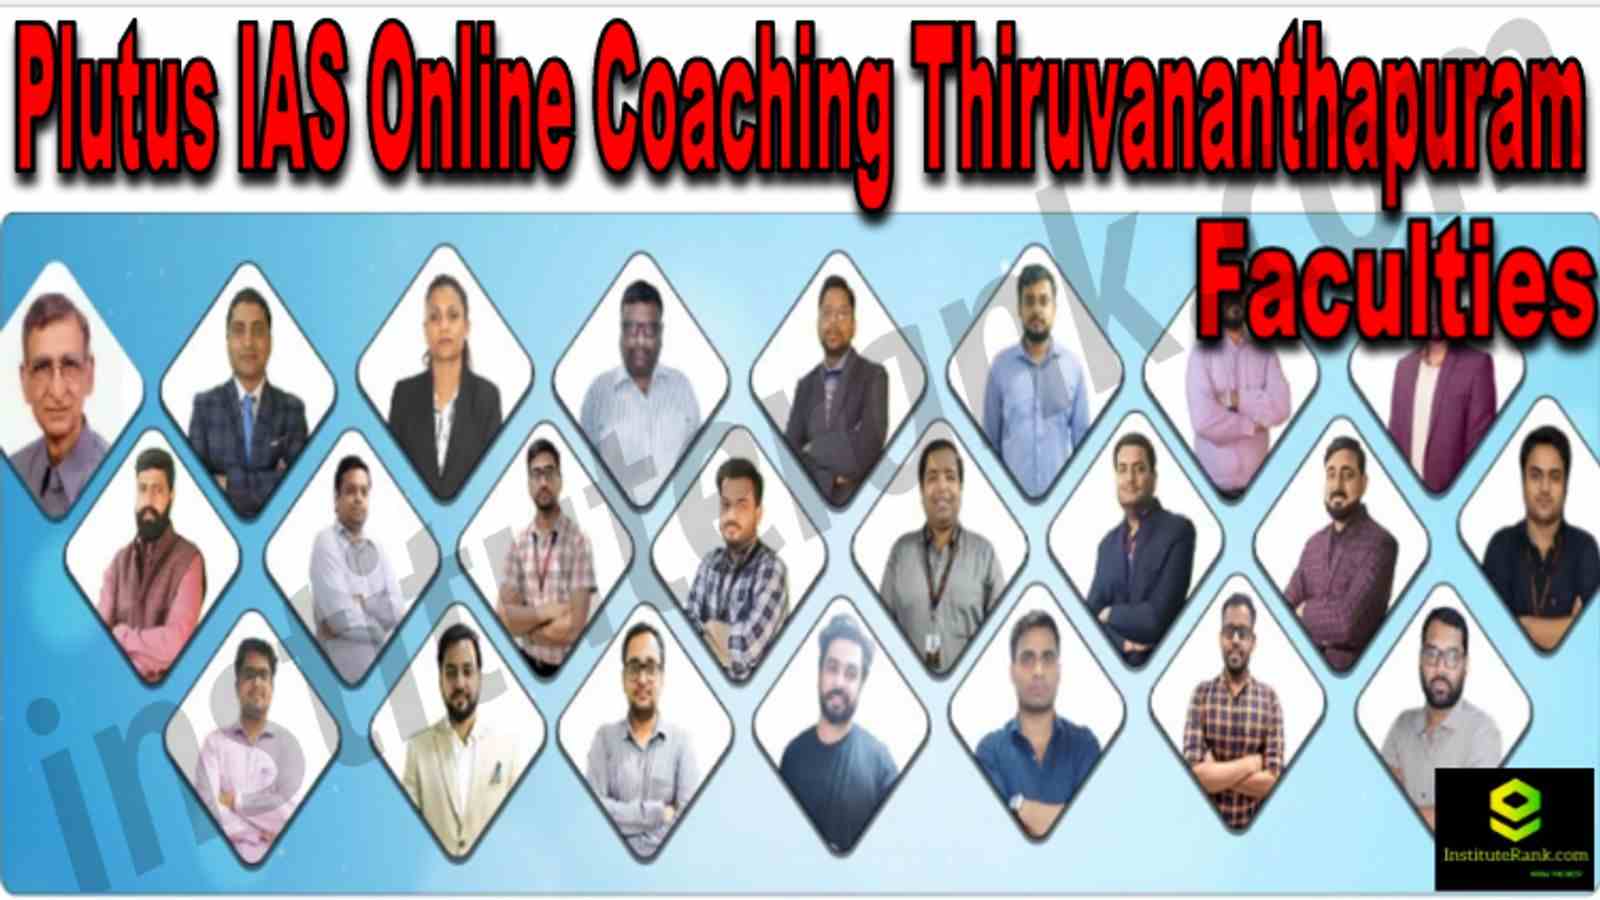 Plutus IAS Online Coaching Thiruvananthapuram Reviews Faculties